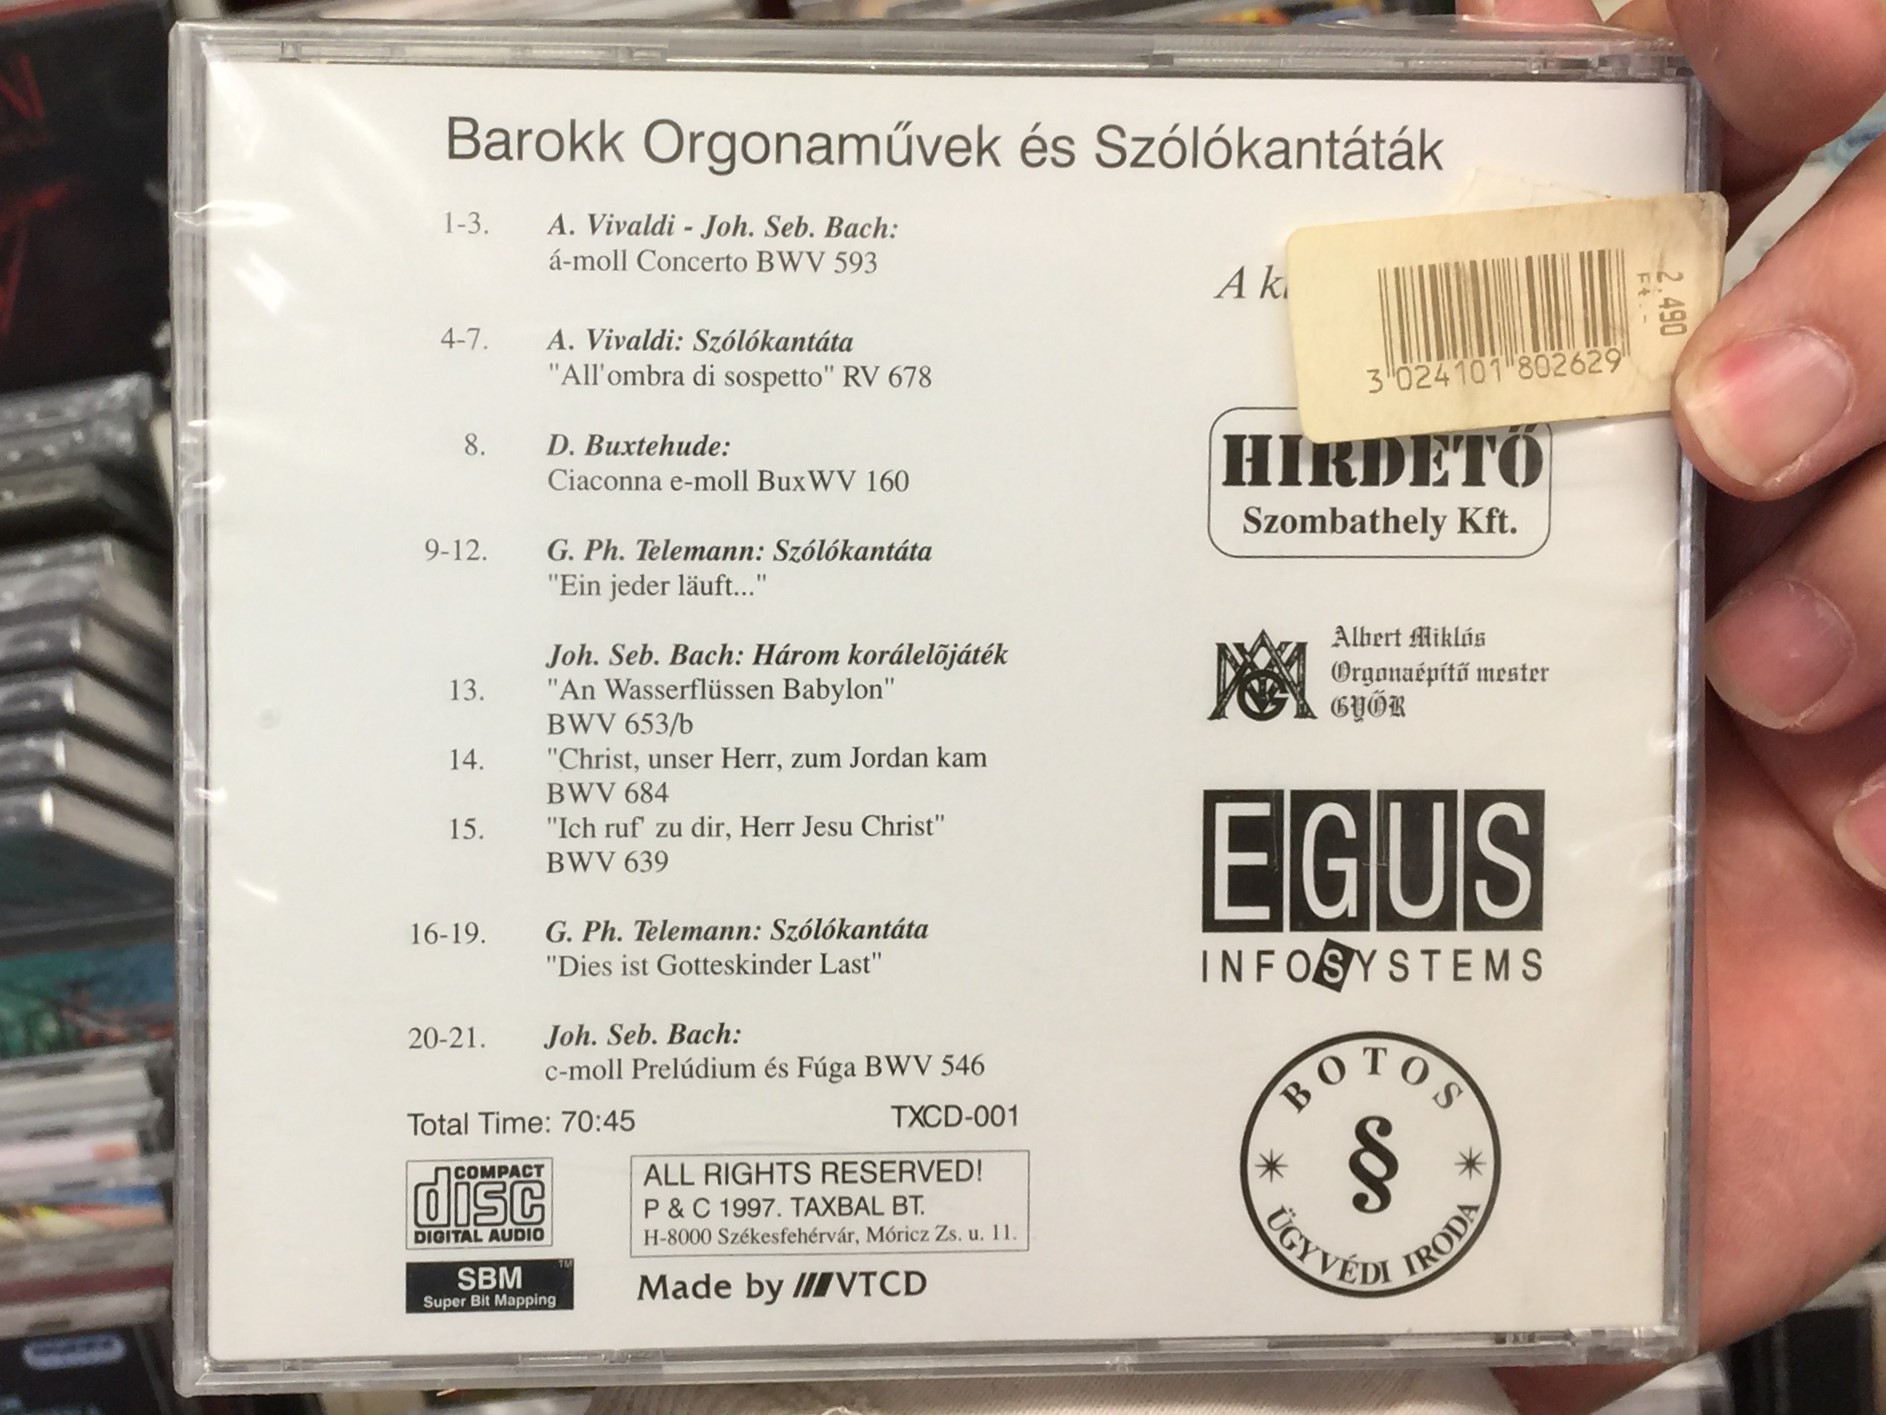 baroque-organ-works-and-solo-cantatas-p-ter-marosv-ri-organ-tenor-dorottya-kuthy-istvan-major-jr.-rita-sonti-works-by-vivaldi-bach-buxtehude-telemann-vtcd-audio-cd-1997-txcd-001-2-.jpg